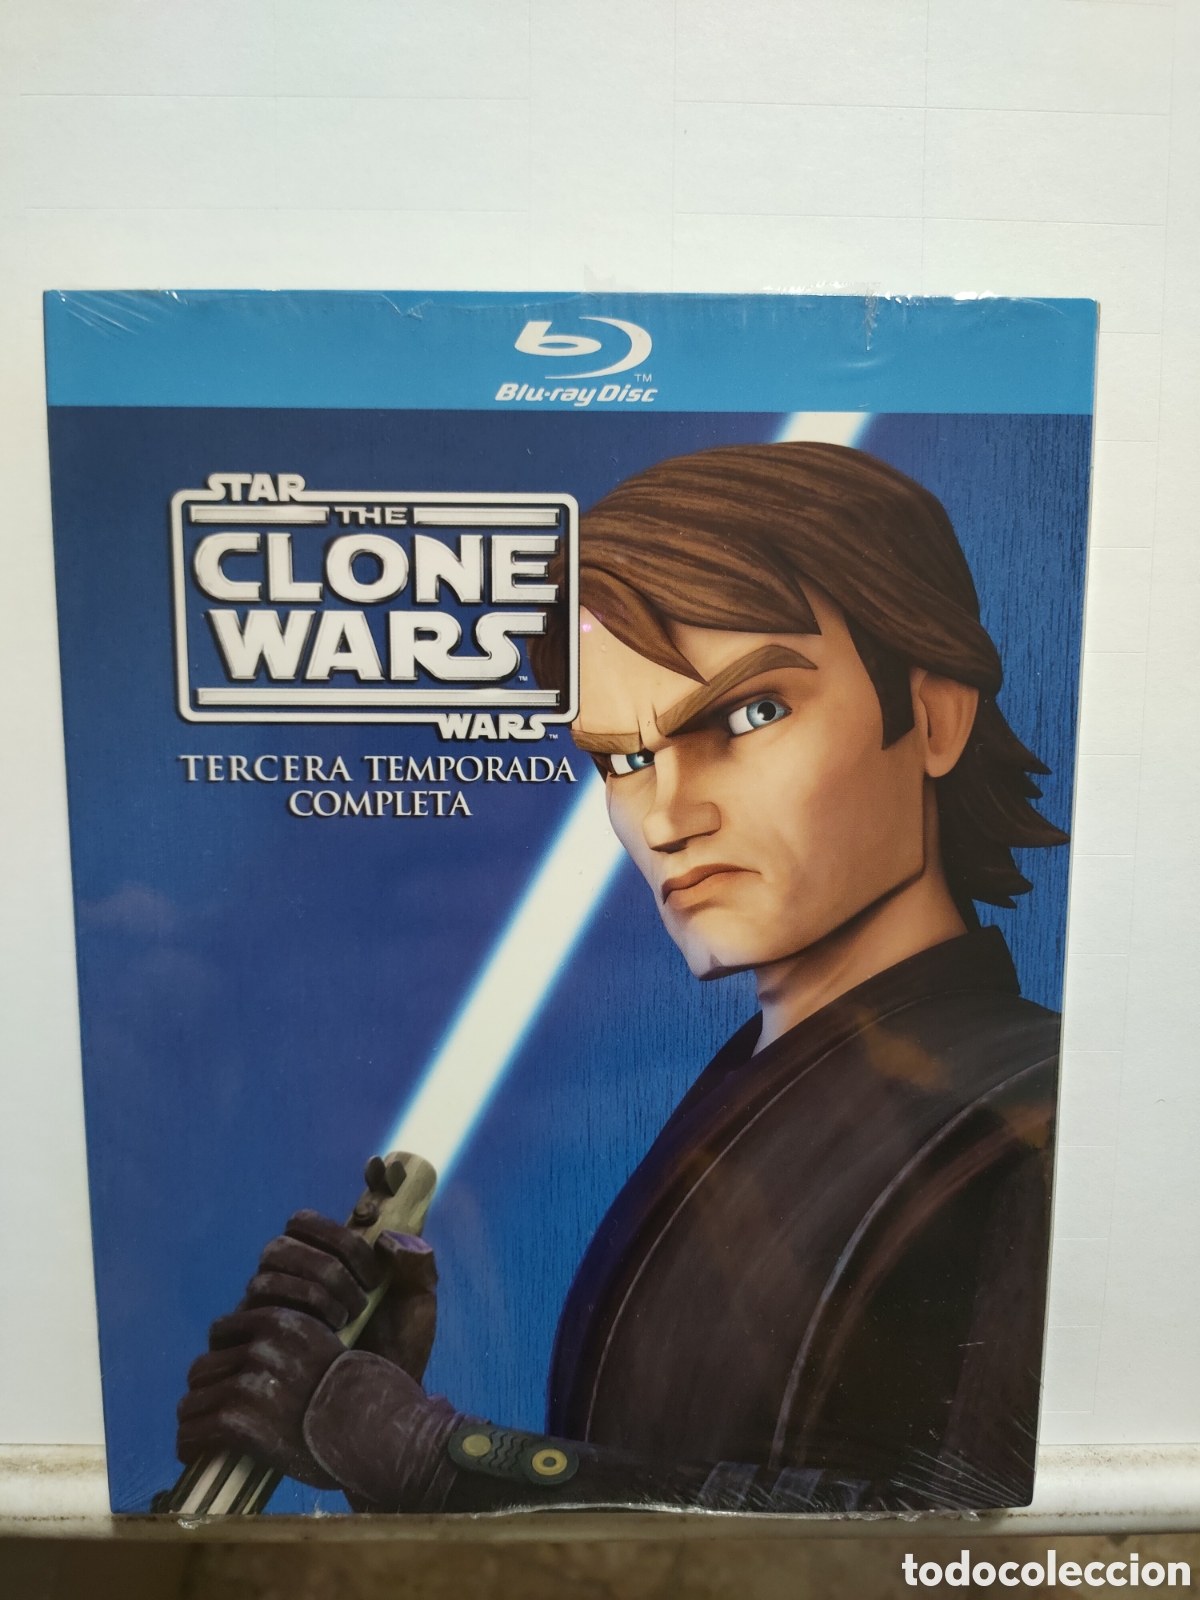 Star Wars The Clone Wars Pelicula Blu-ray